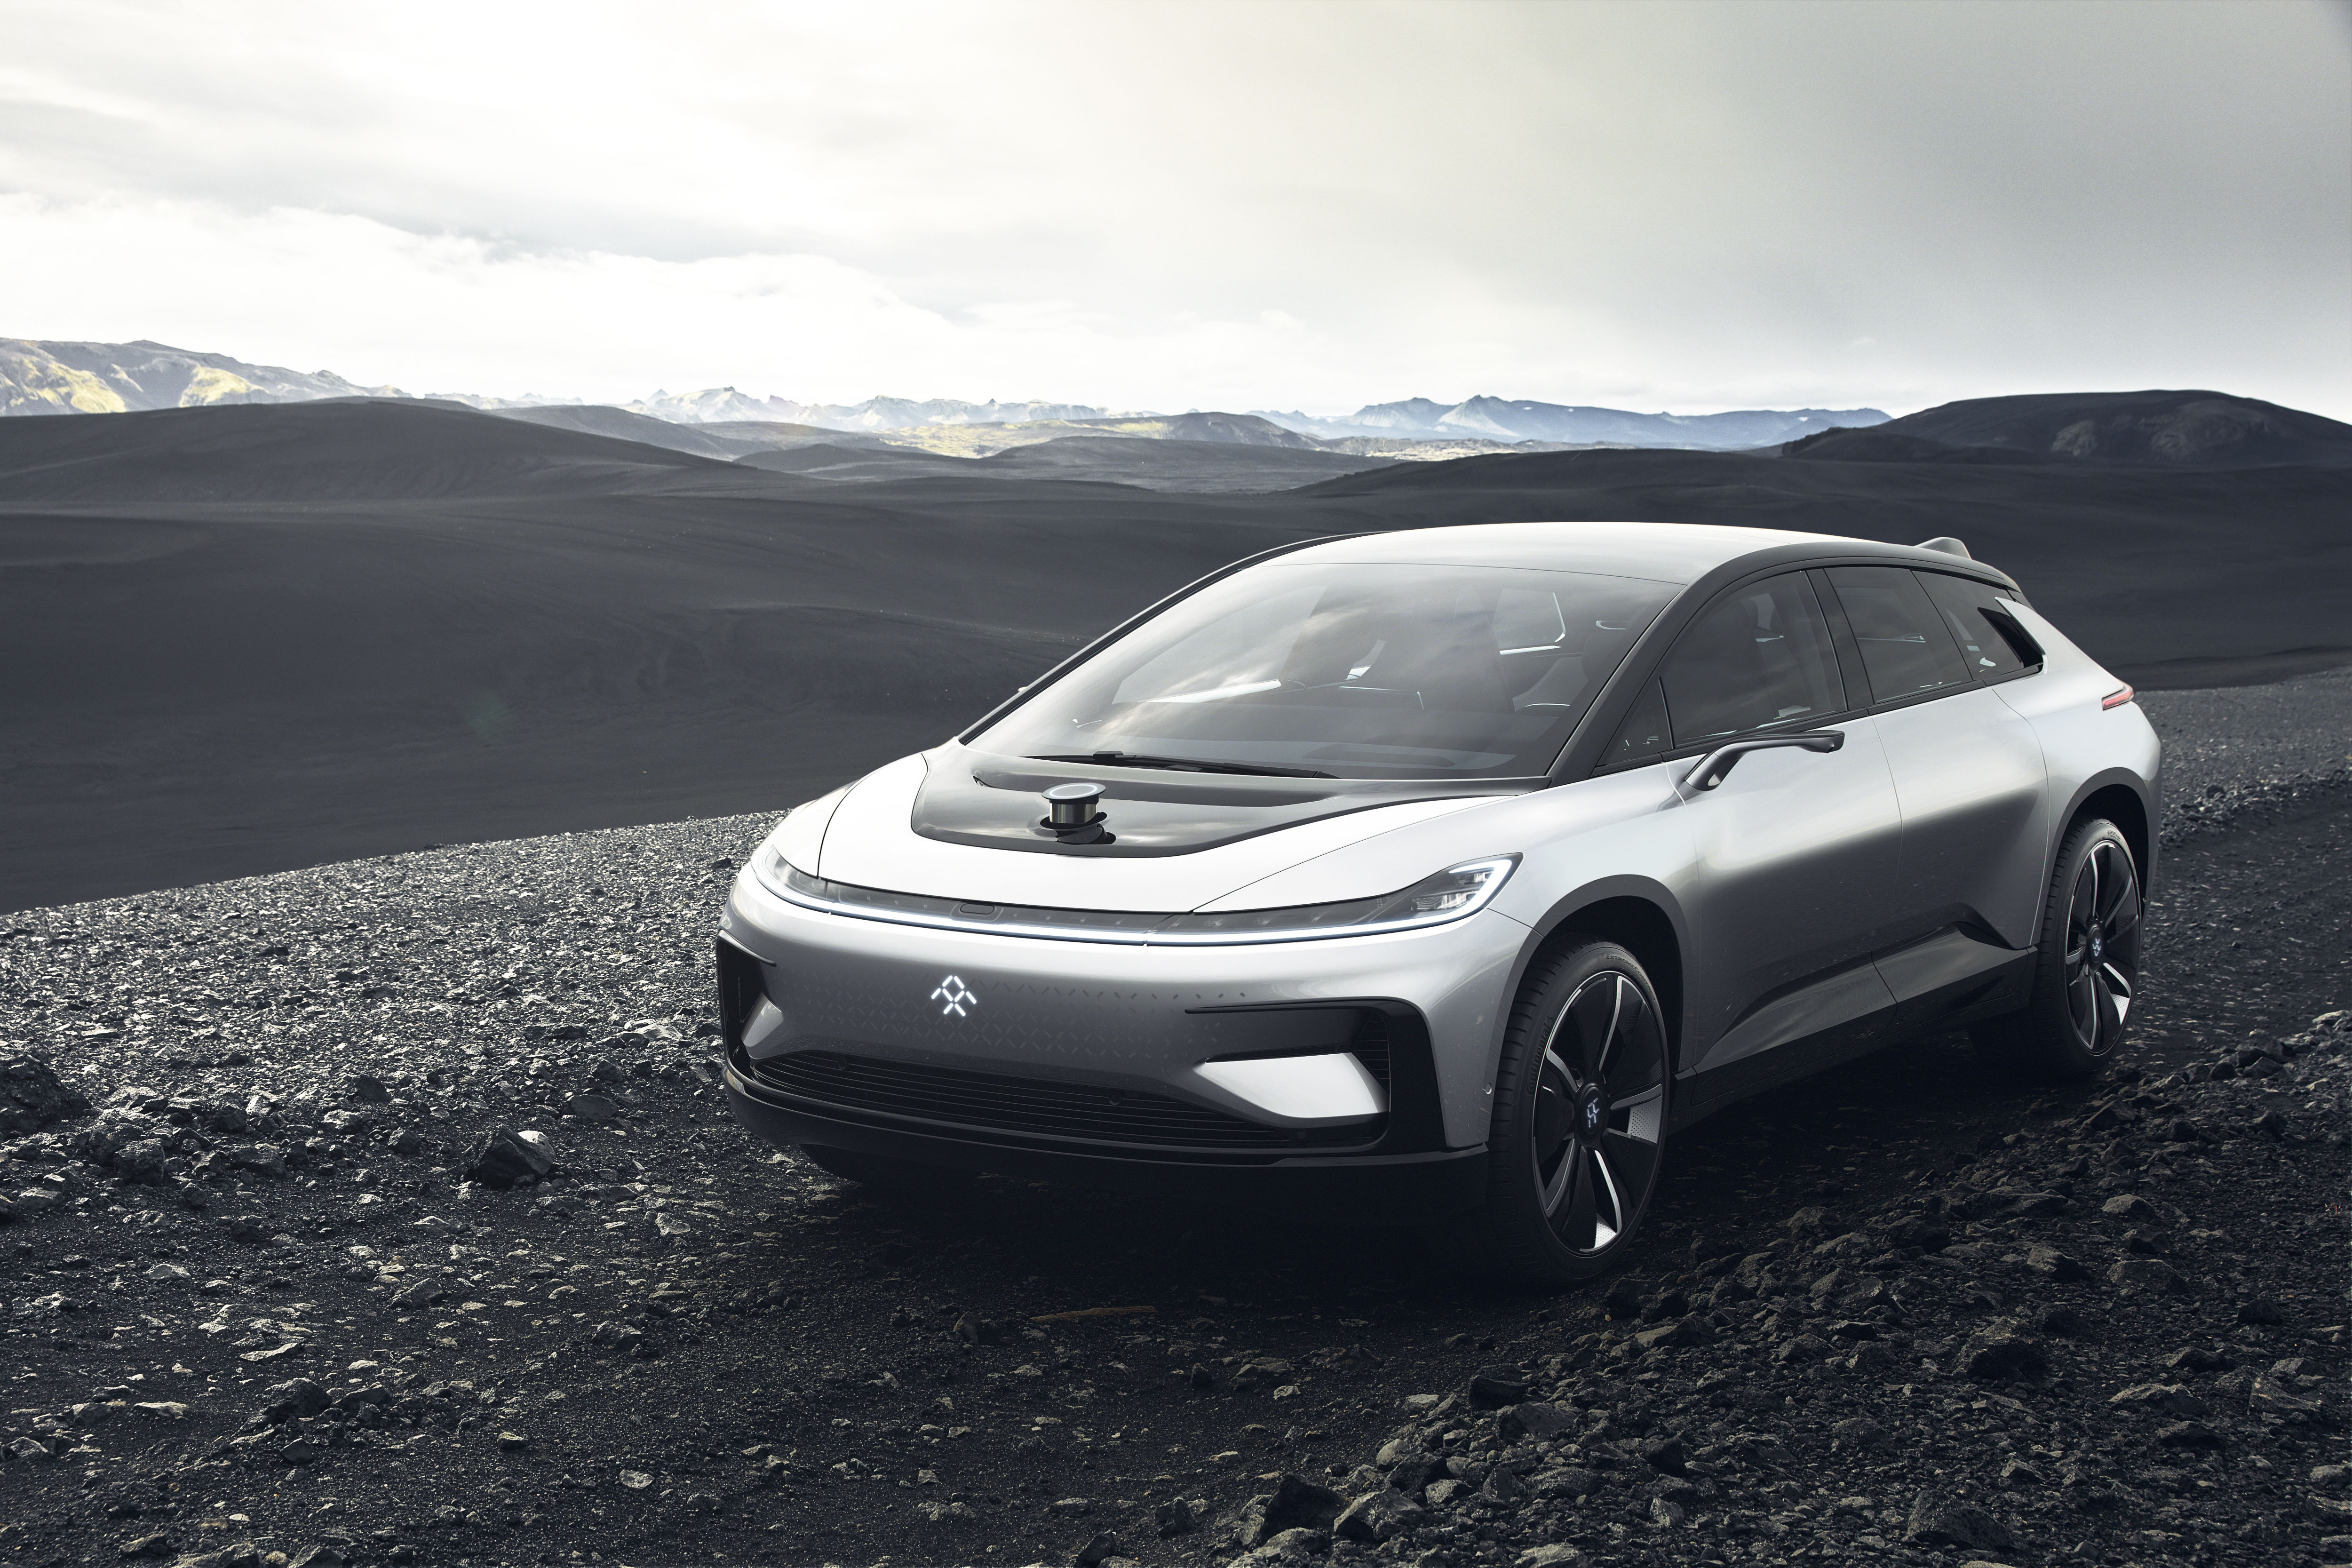 Faraday Future Unveils Latest Electric Vehicle, FF91